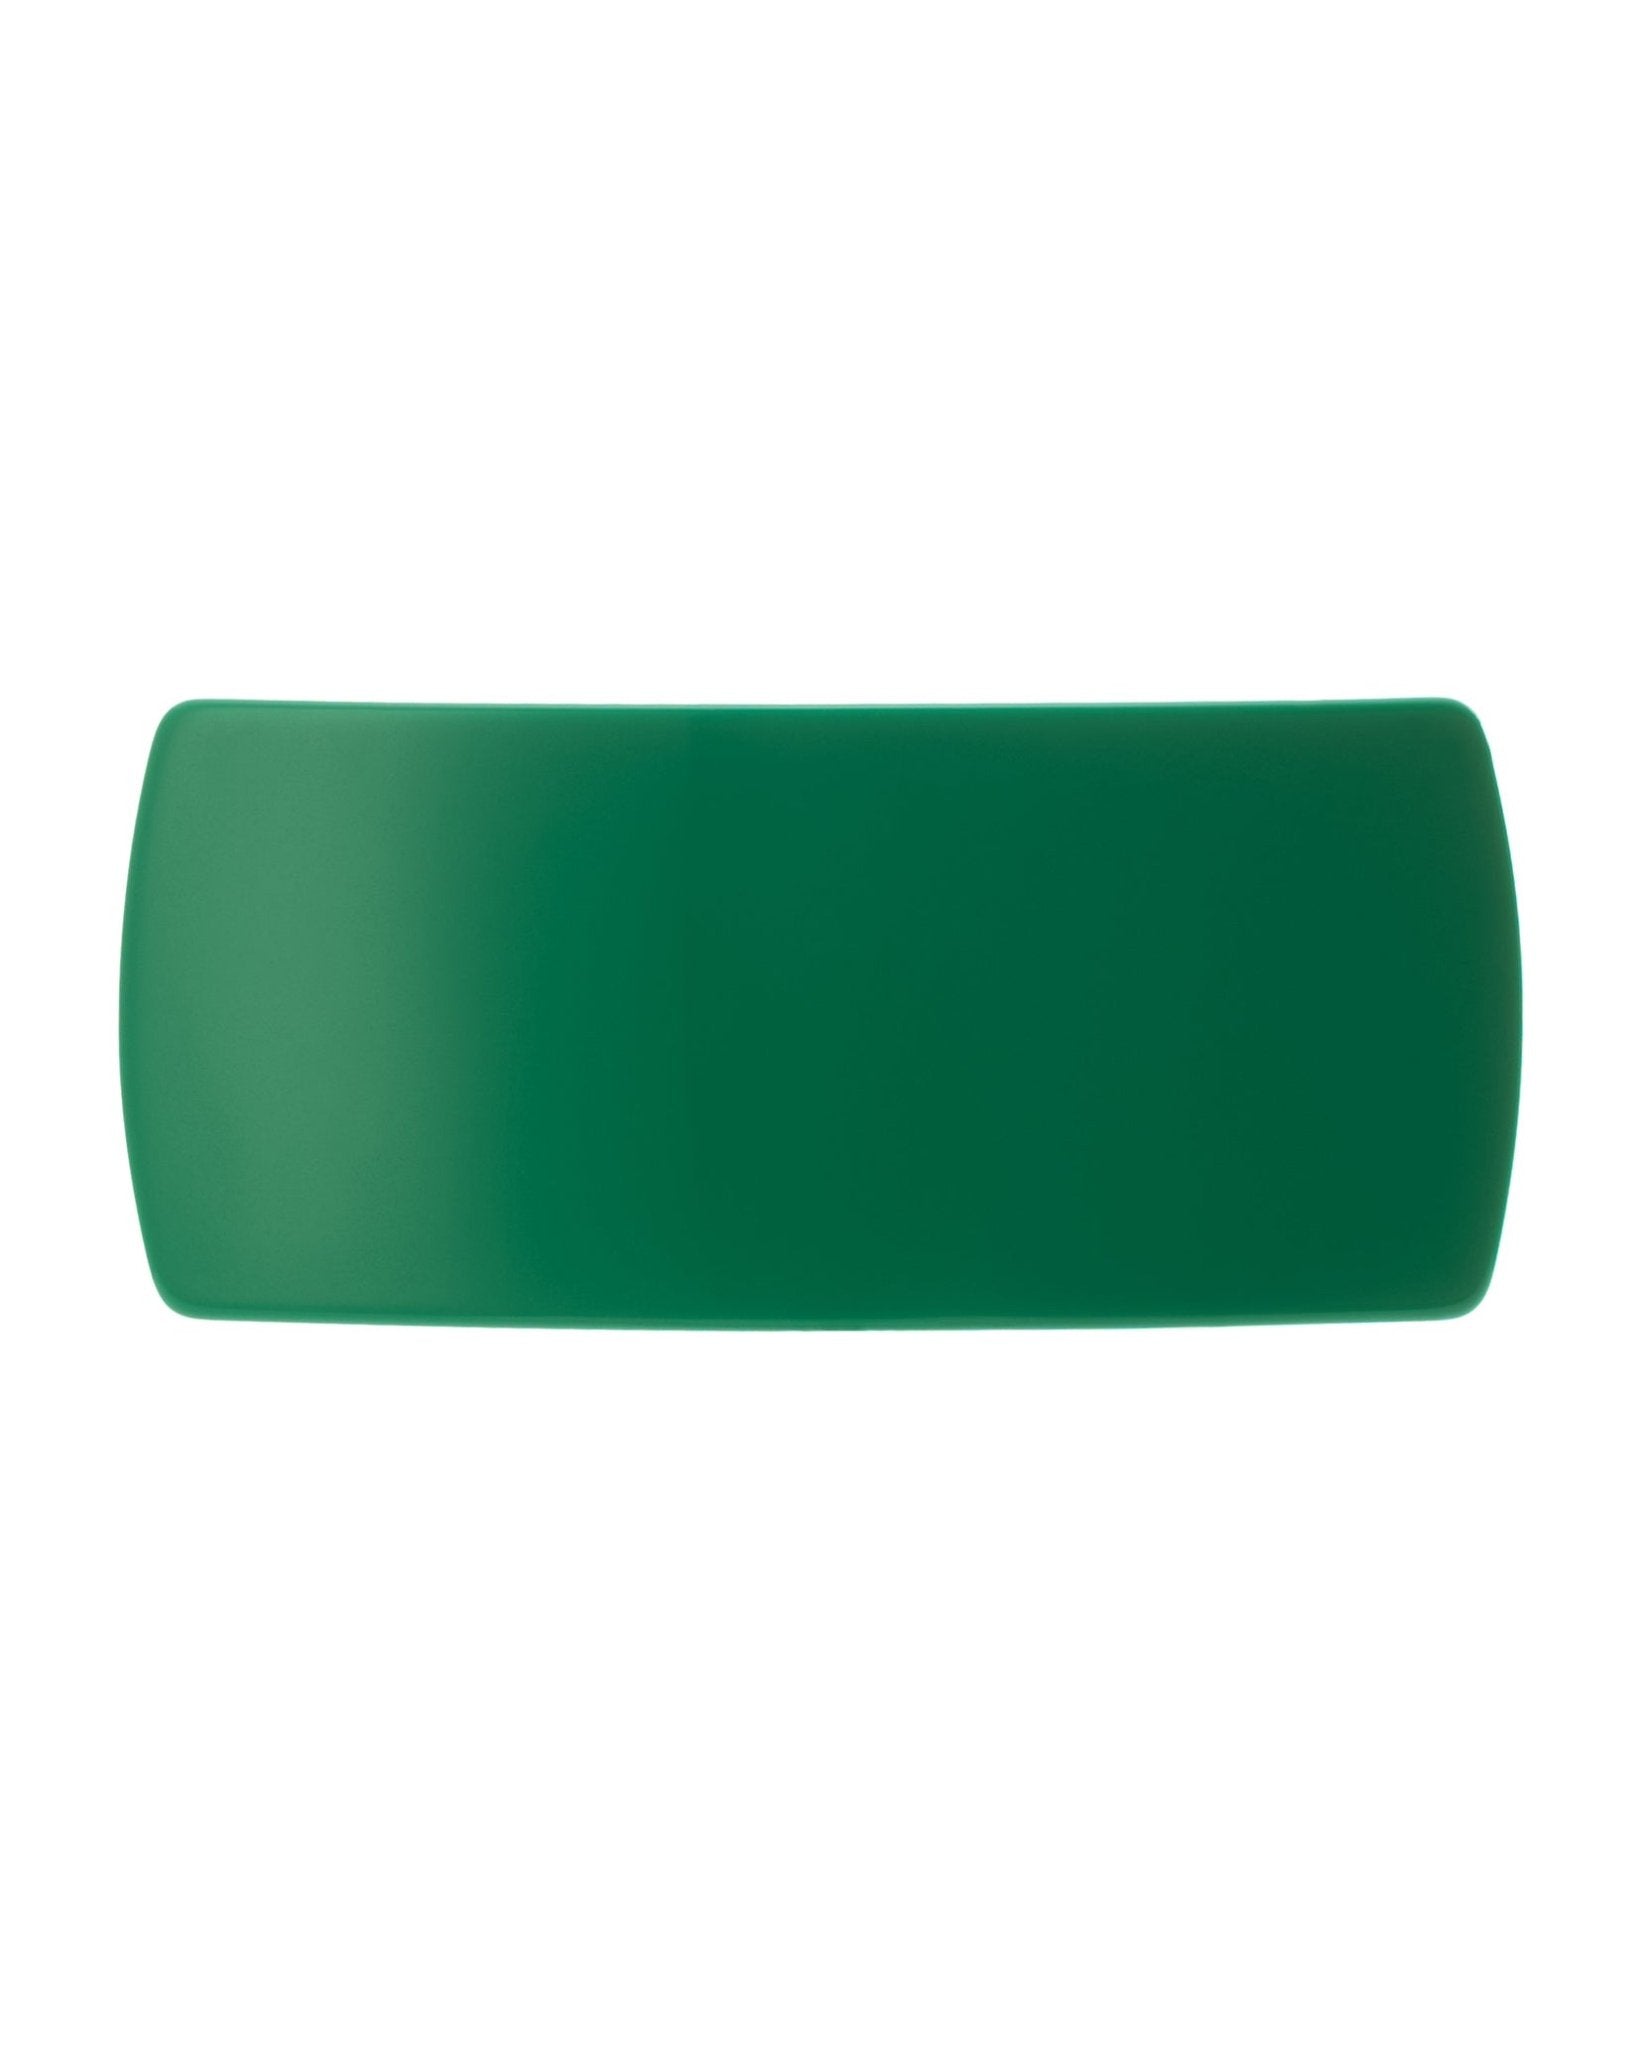 Jumbo Box Clip in Bright Green - MACHETE